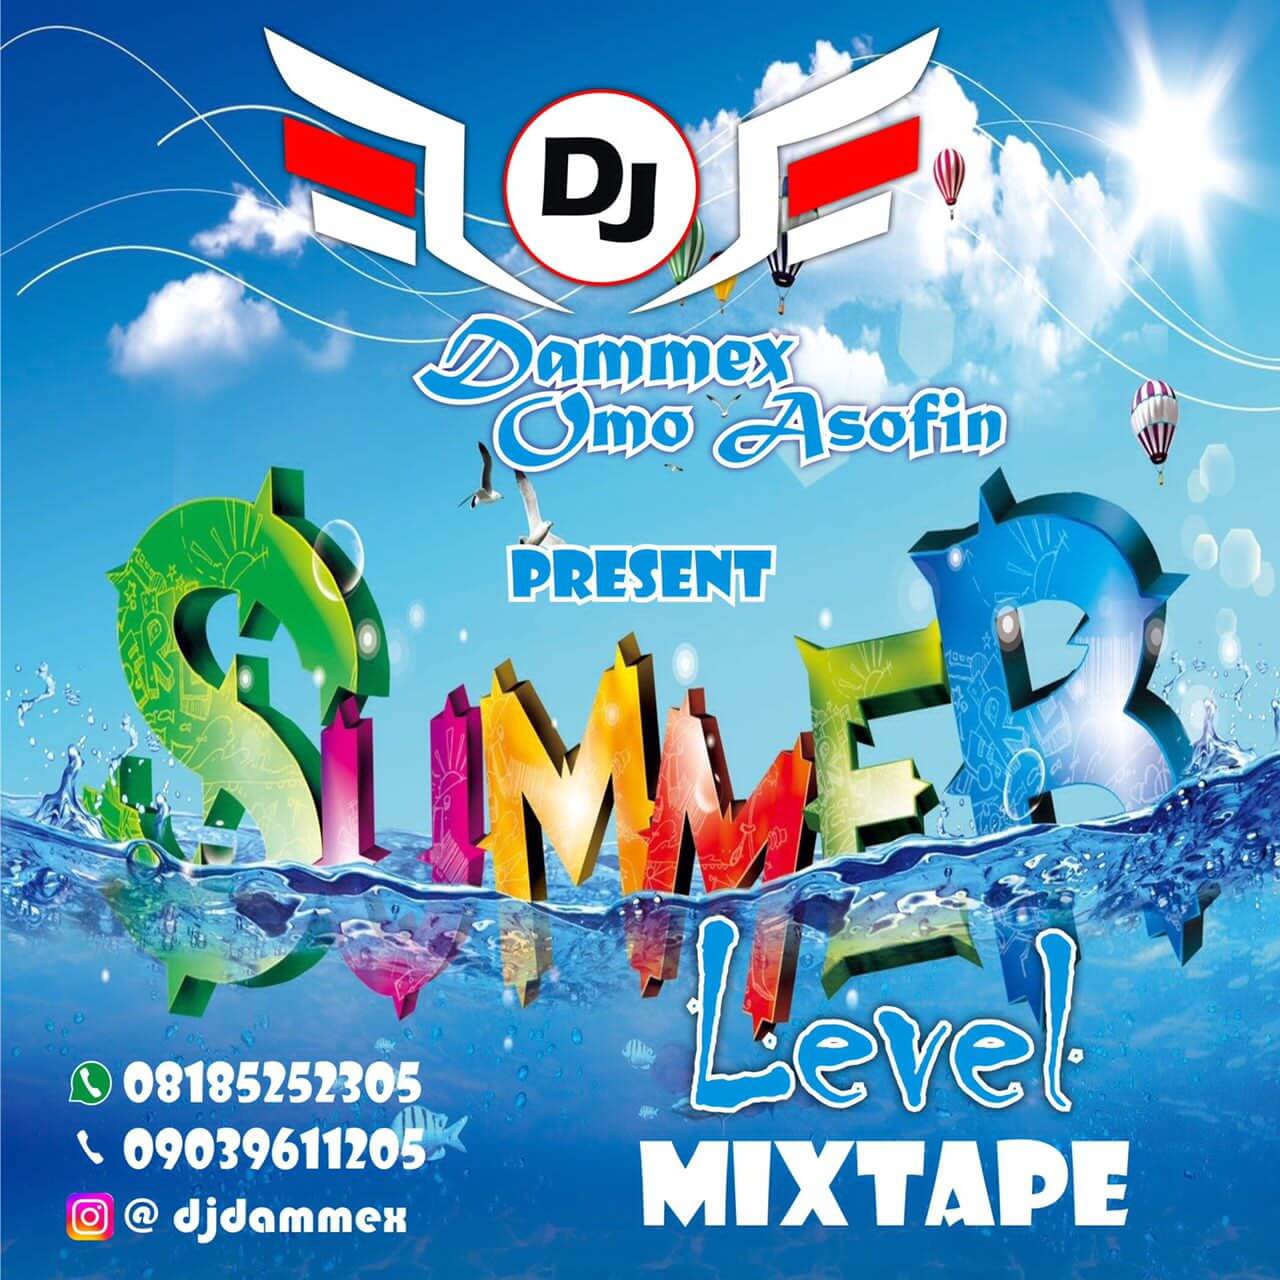 Dj Dammex Omoasofin - Summer level Mixtape